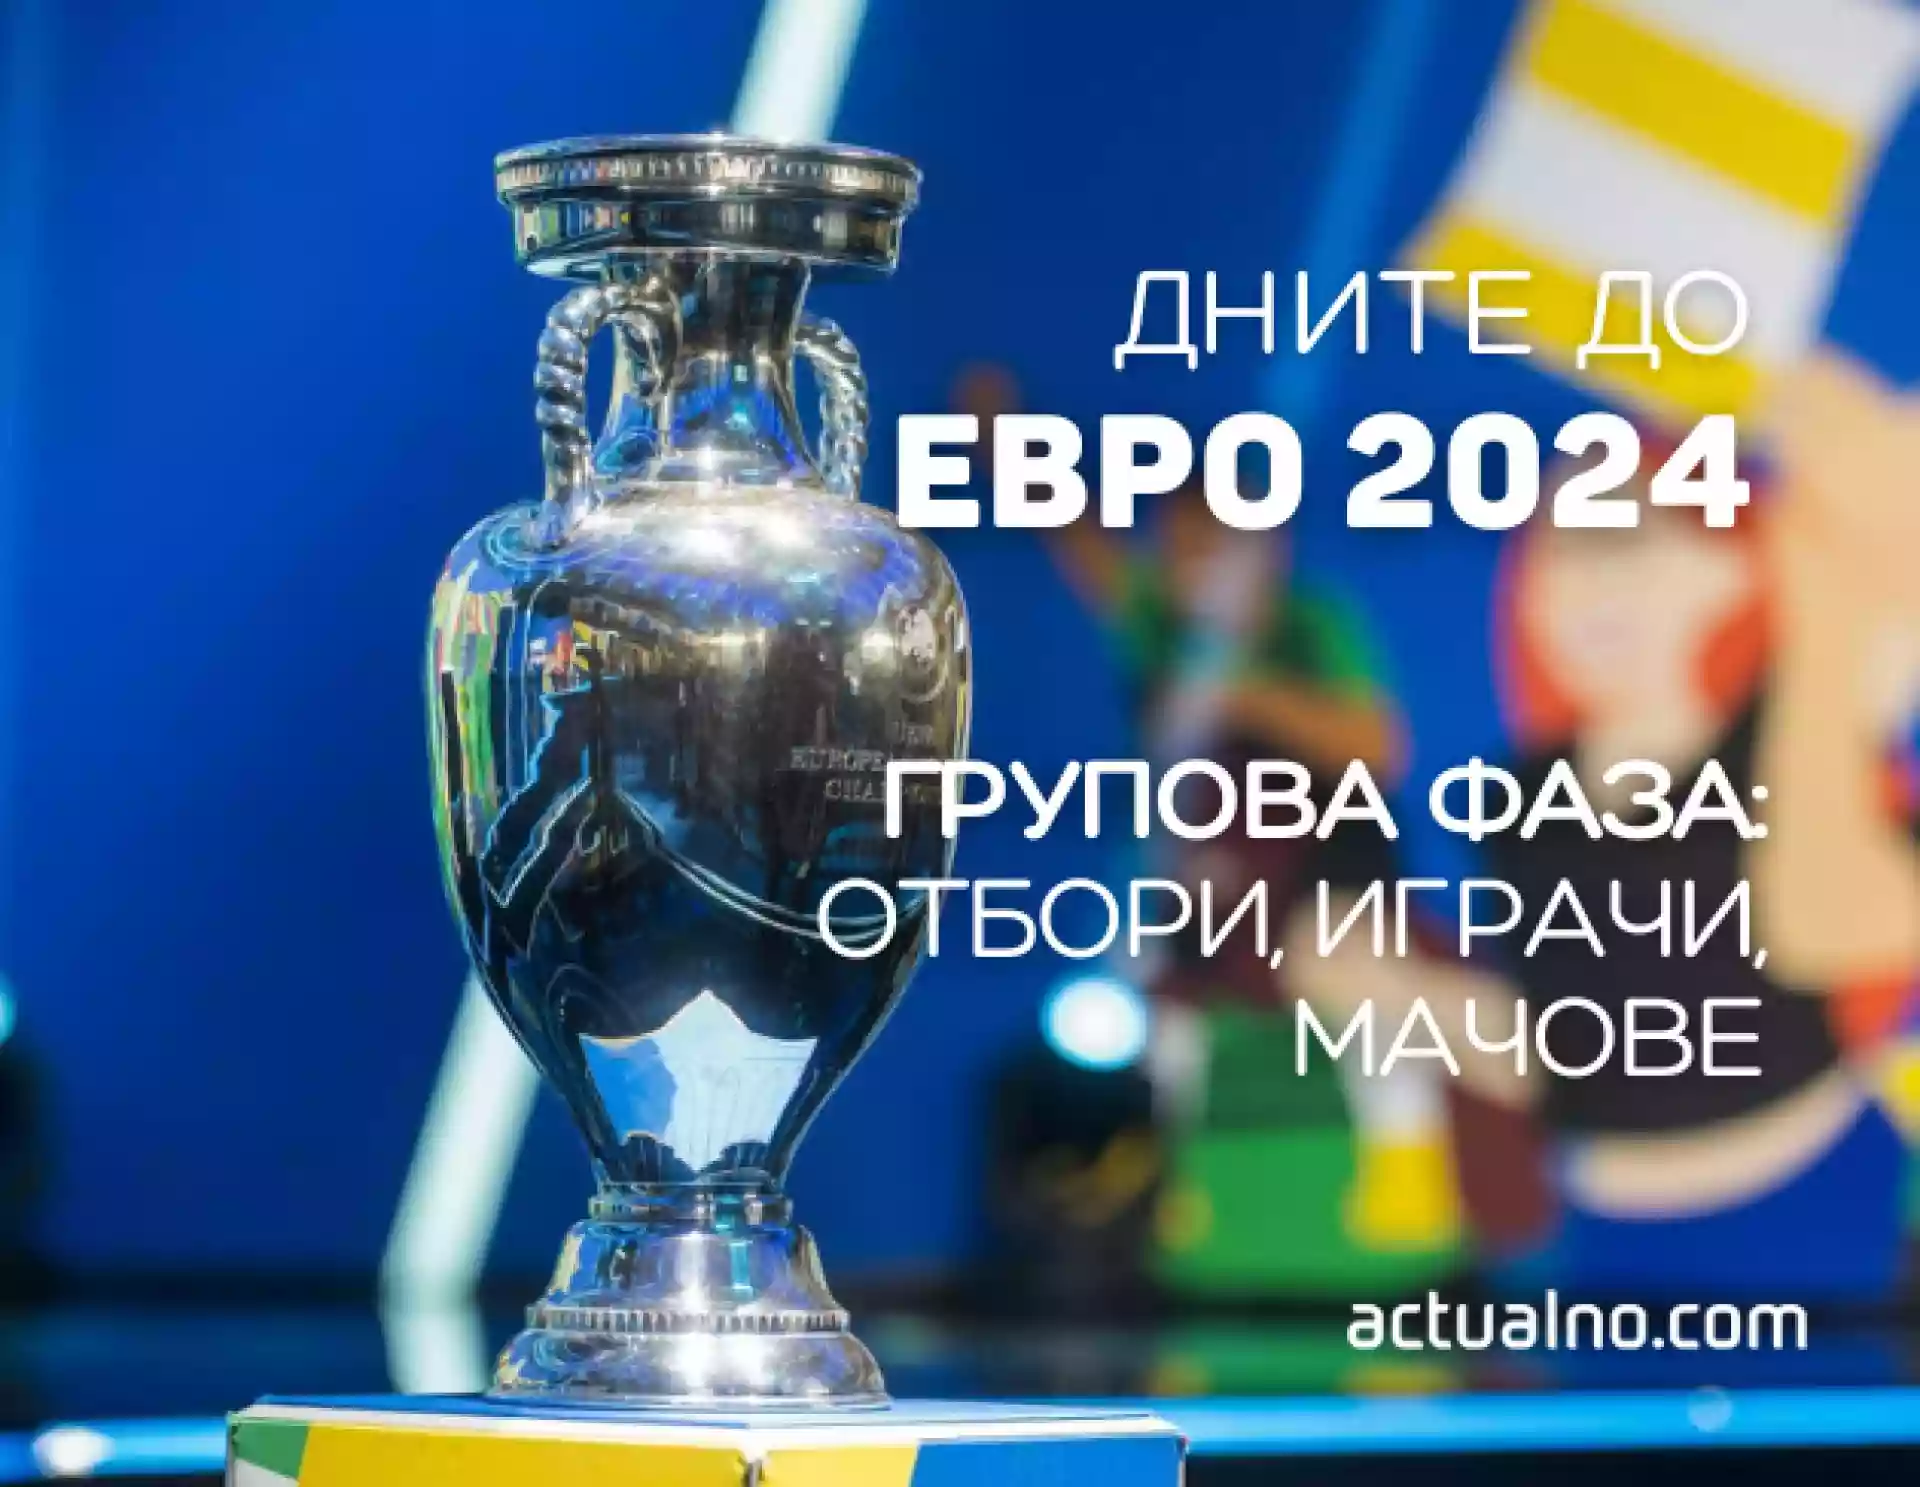 Групова фаза Евро 2024 - отбори, мачове, играчи